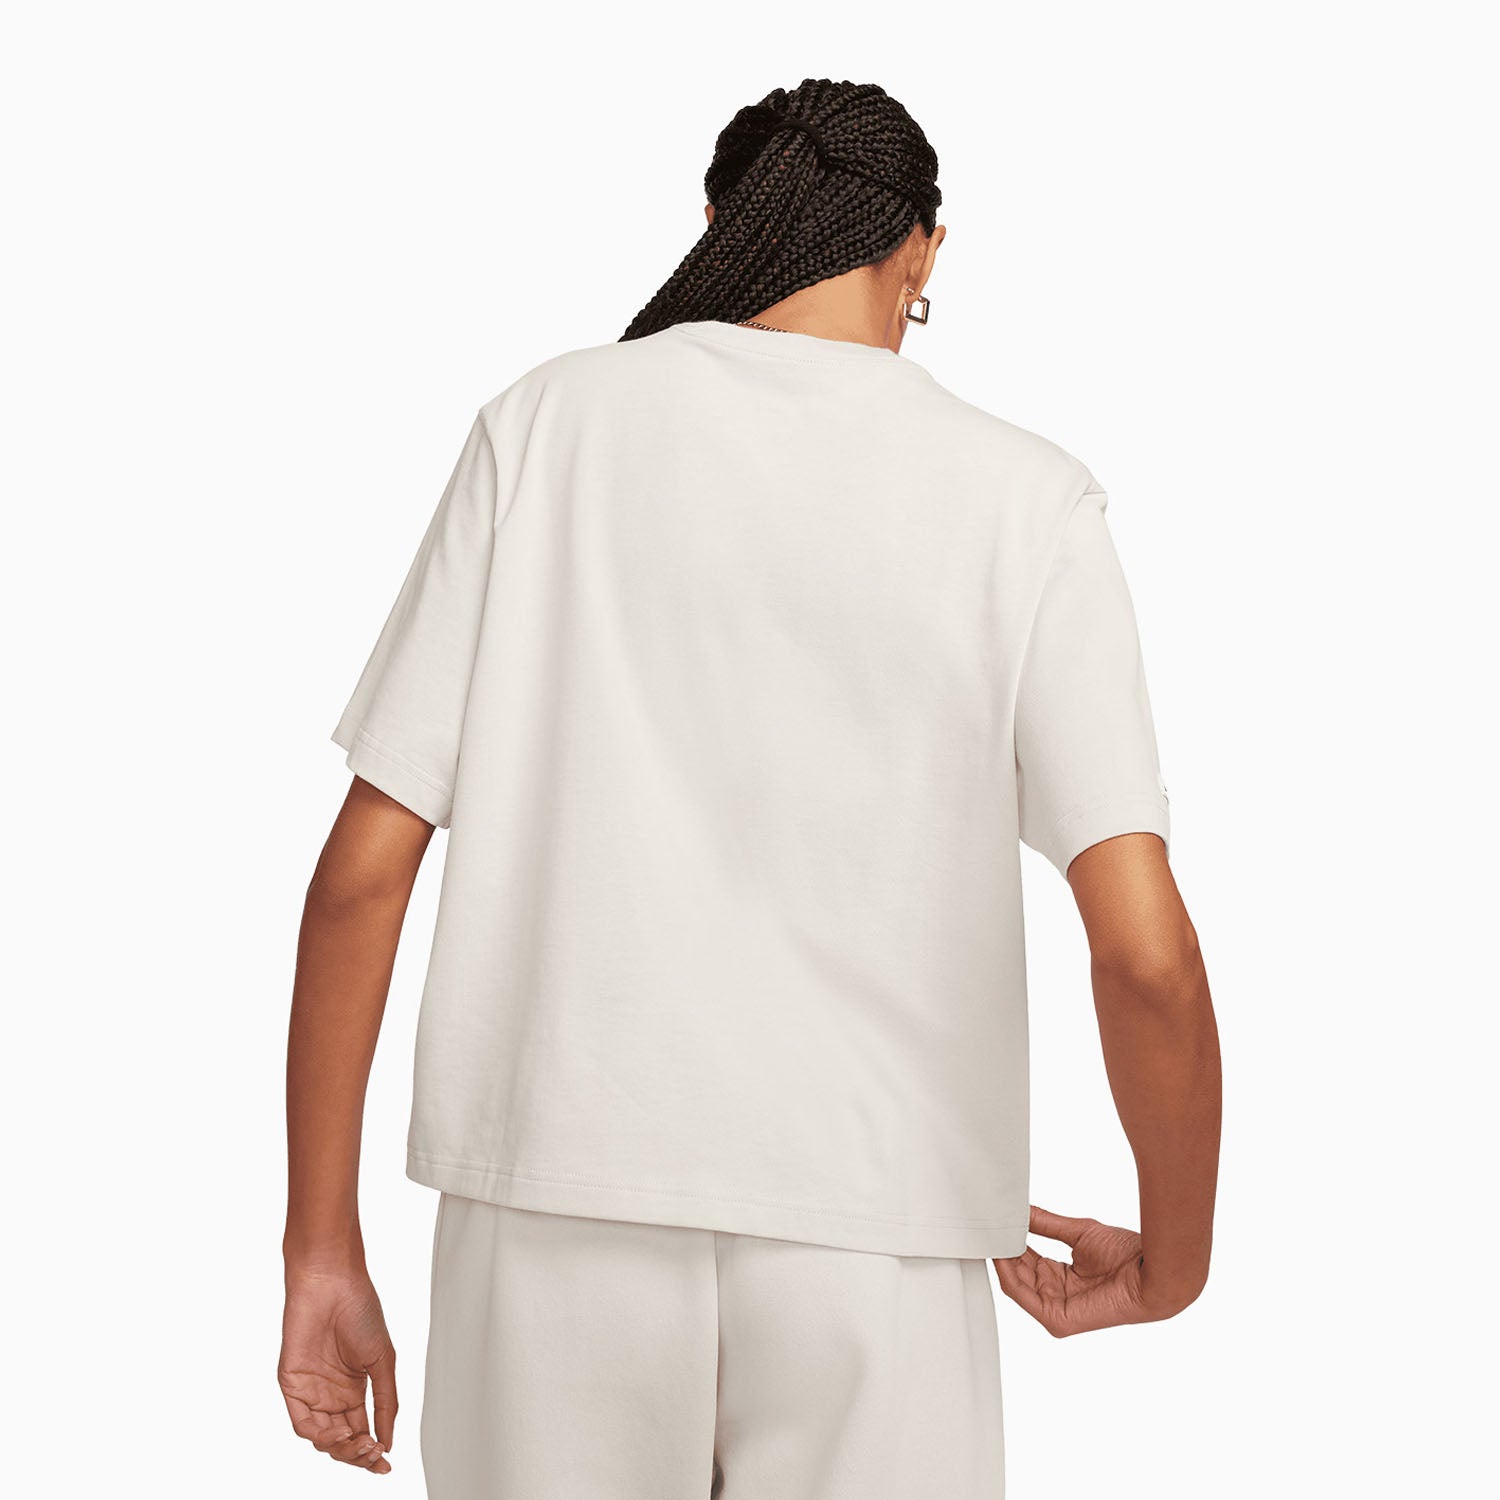 nike-womens-sportswear-classic-short-sleeve-t-shirt-fq6600-104